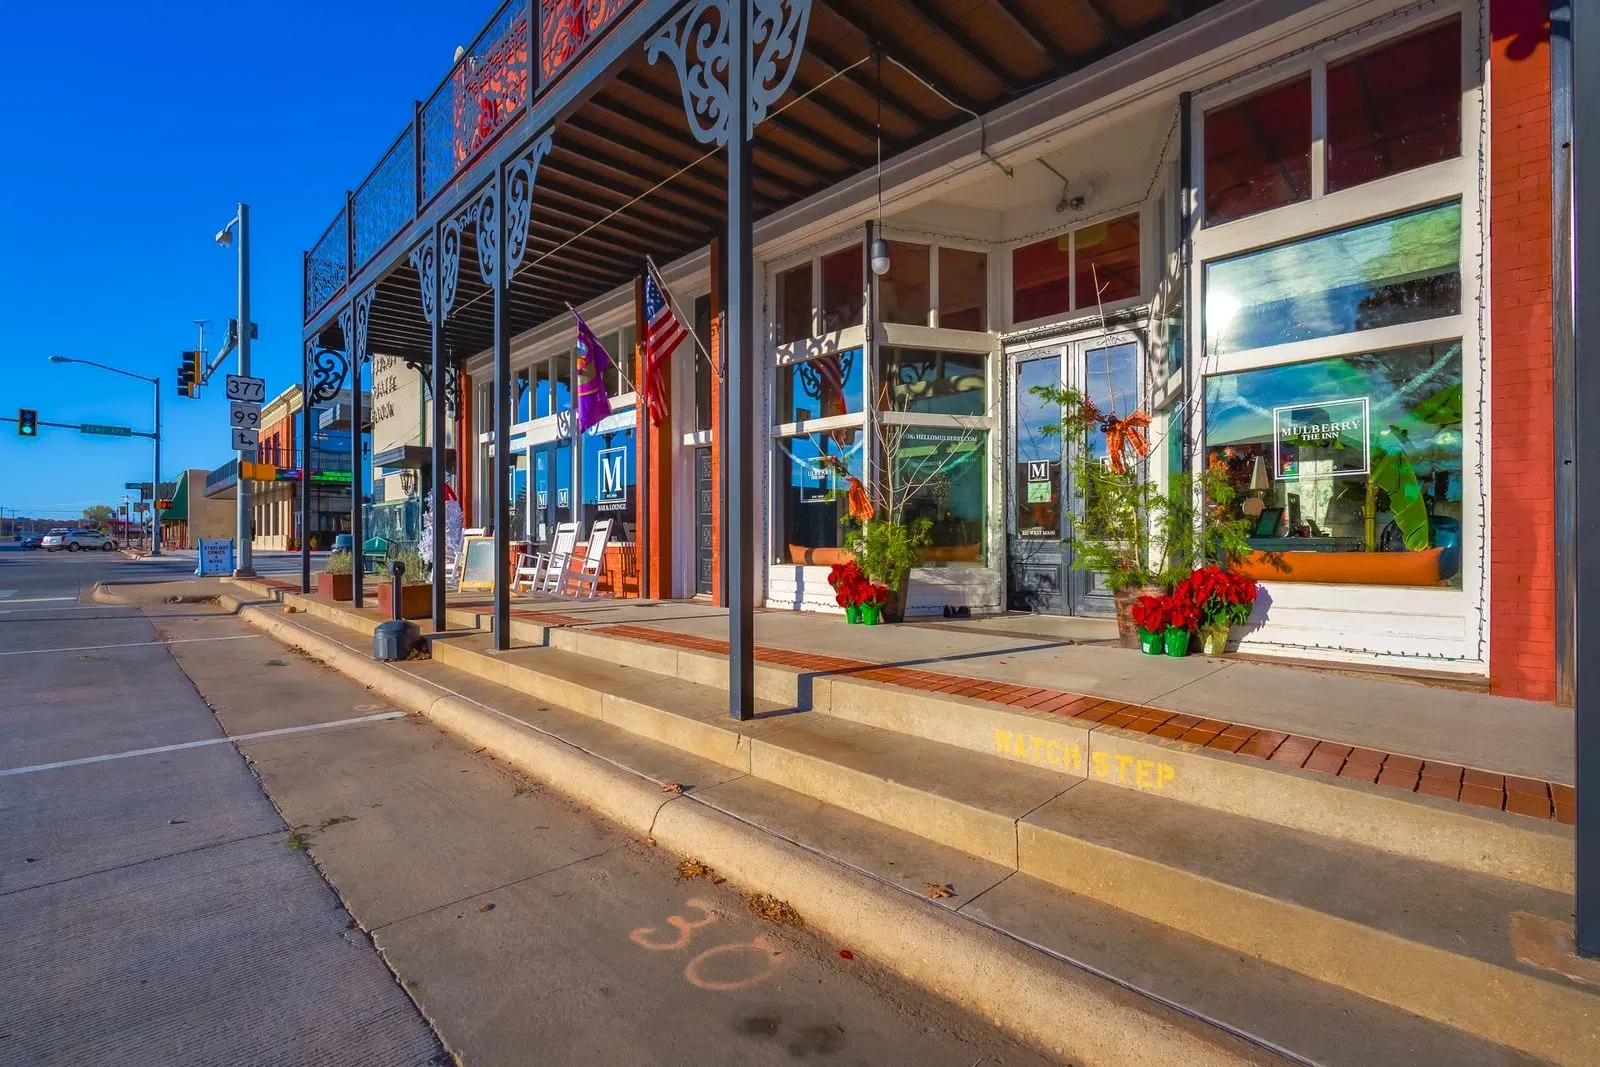 Historic Oklahoma Inn From Blake Shelton’s ‘Sangria’ Video Listed For Sale